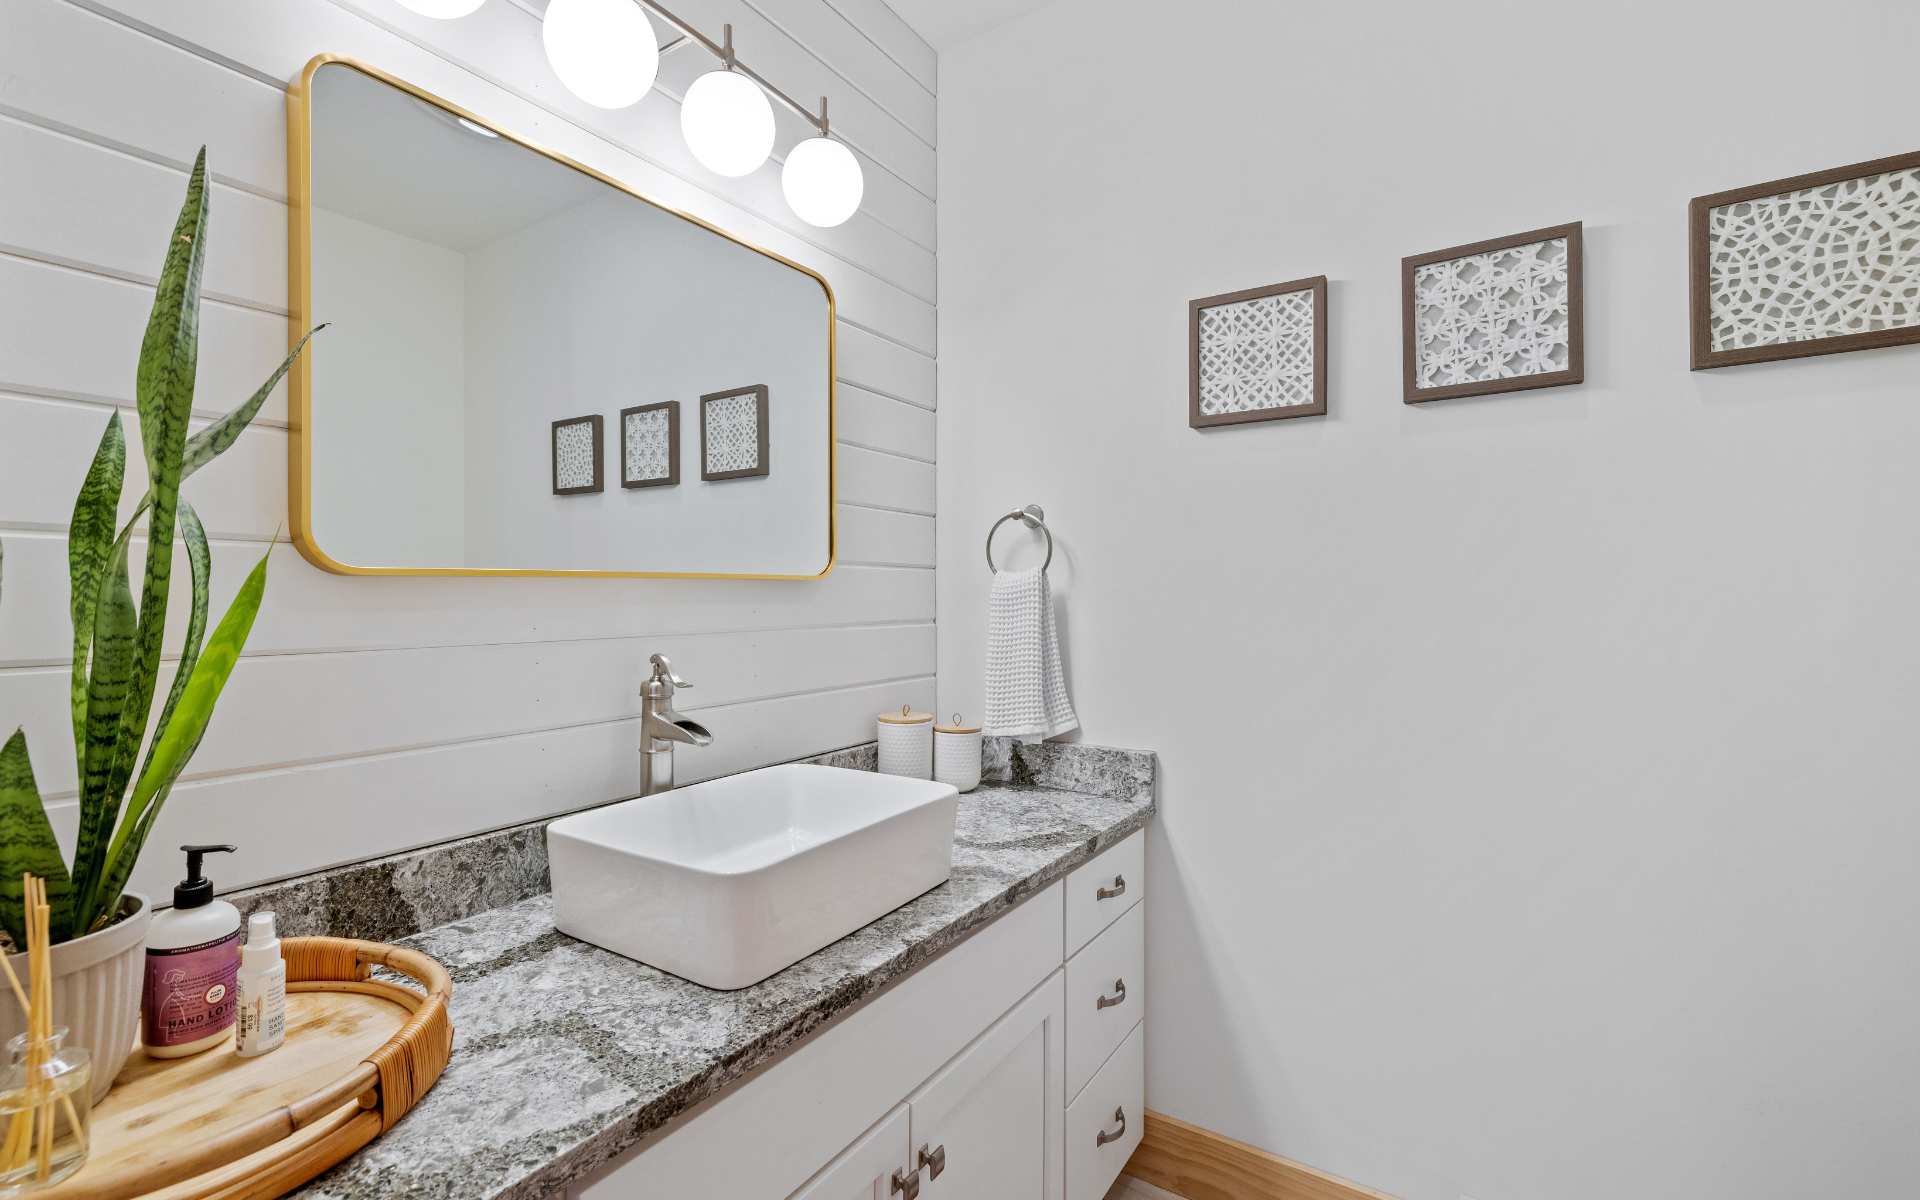 Elegant white bathroom vanity with granite countertop